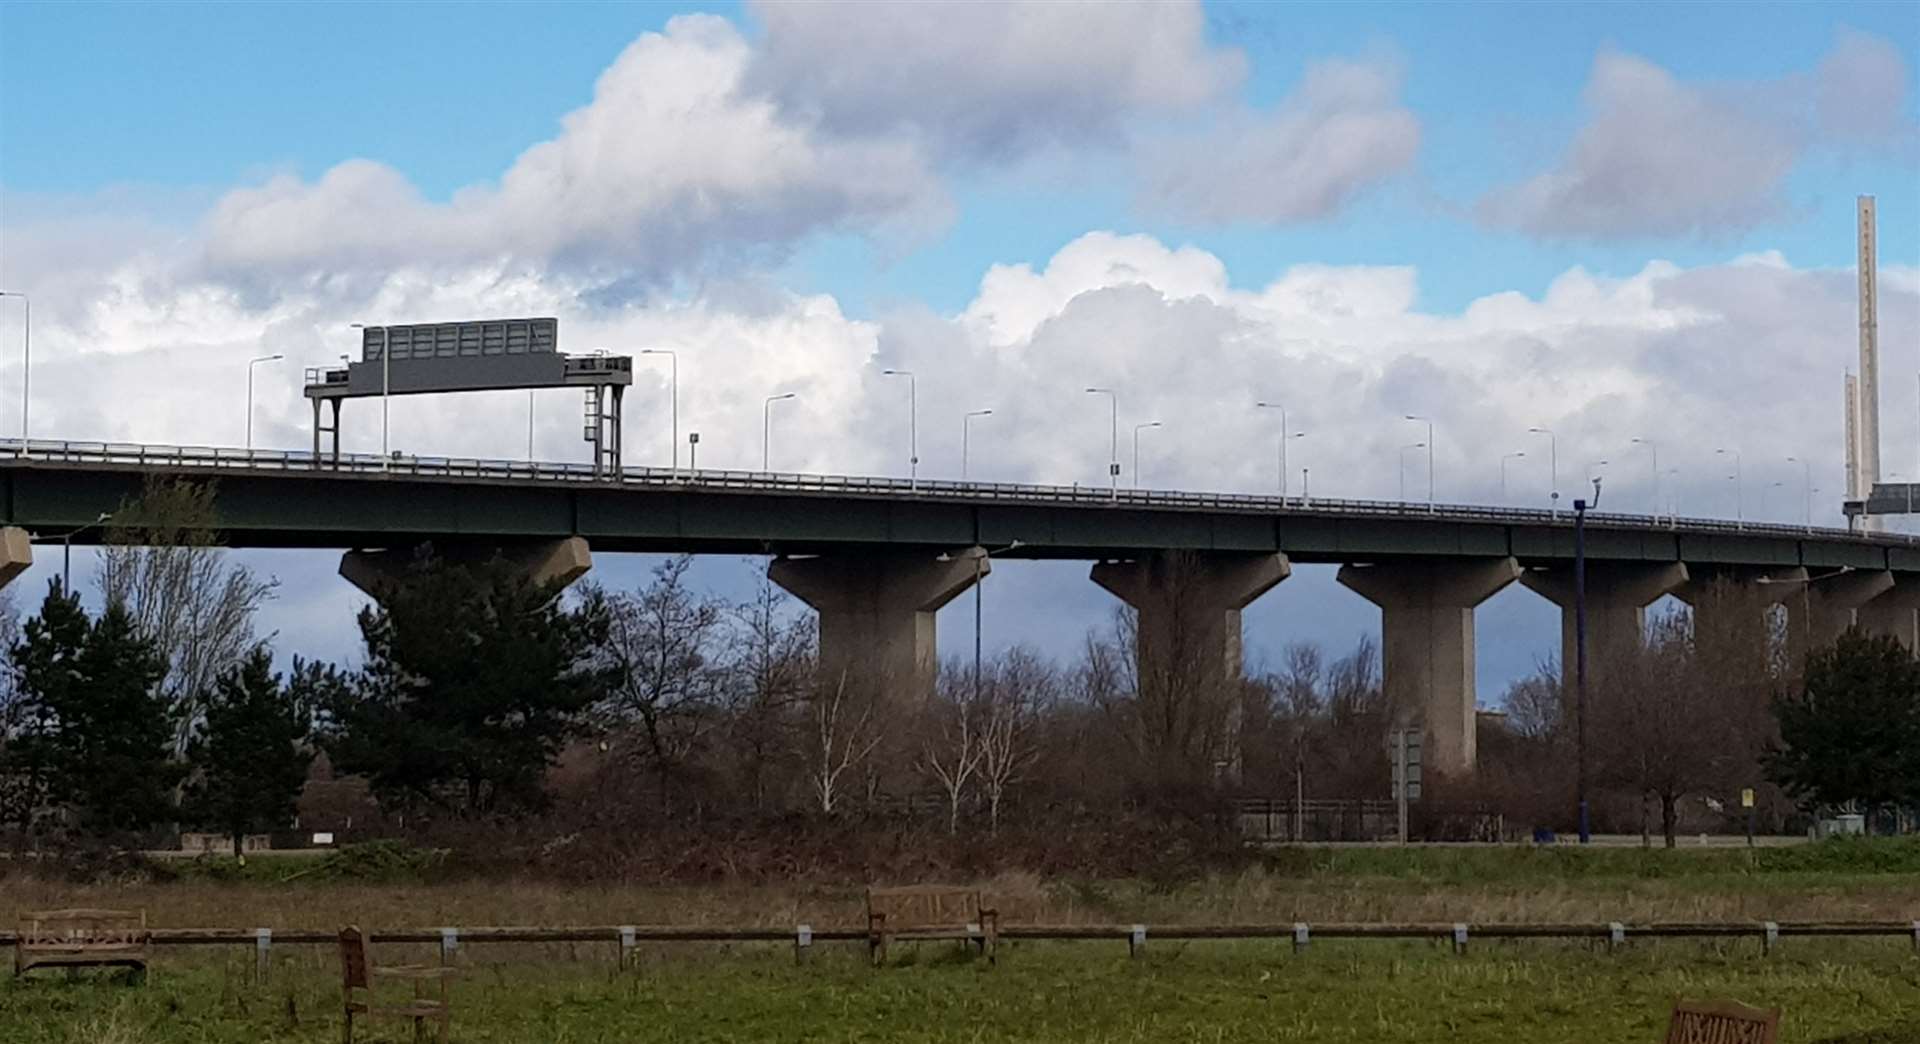 A rare sight, no traffic on the QEII bridge